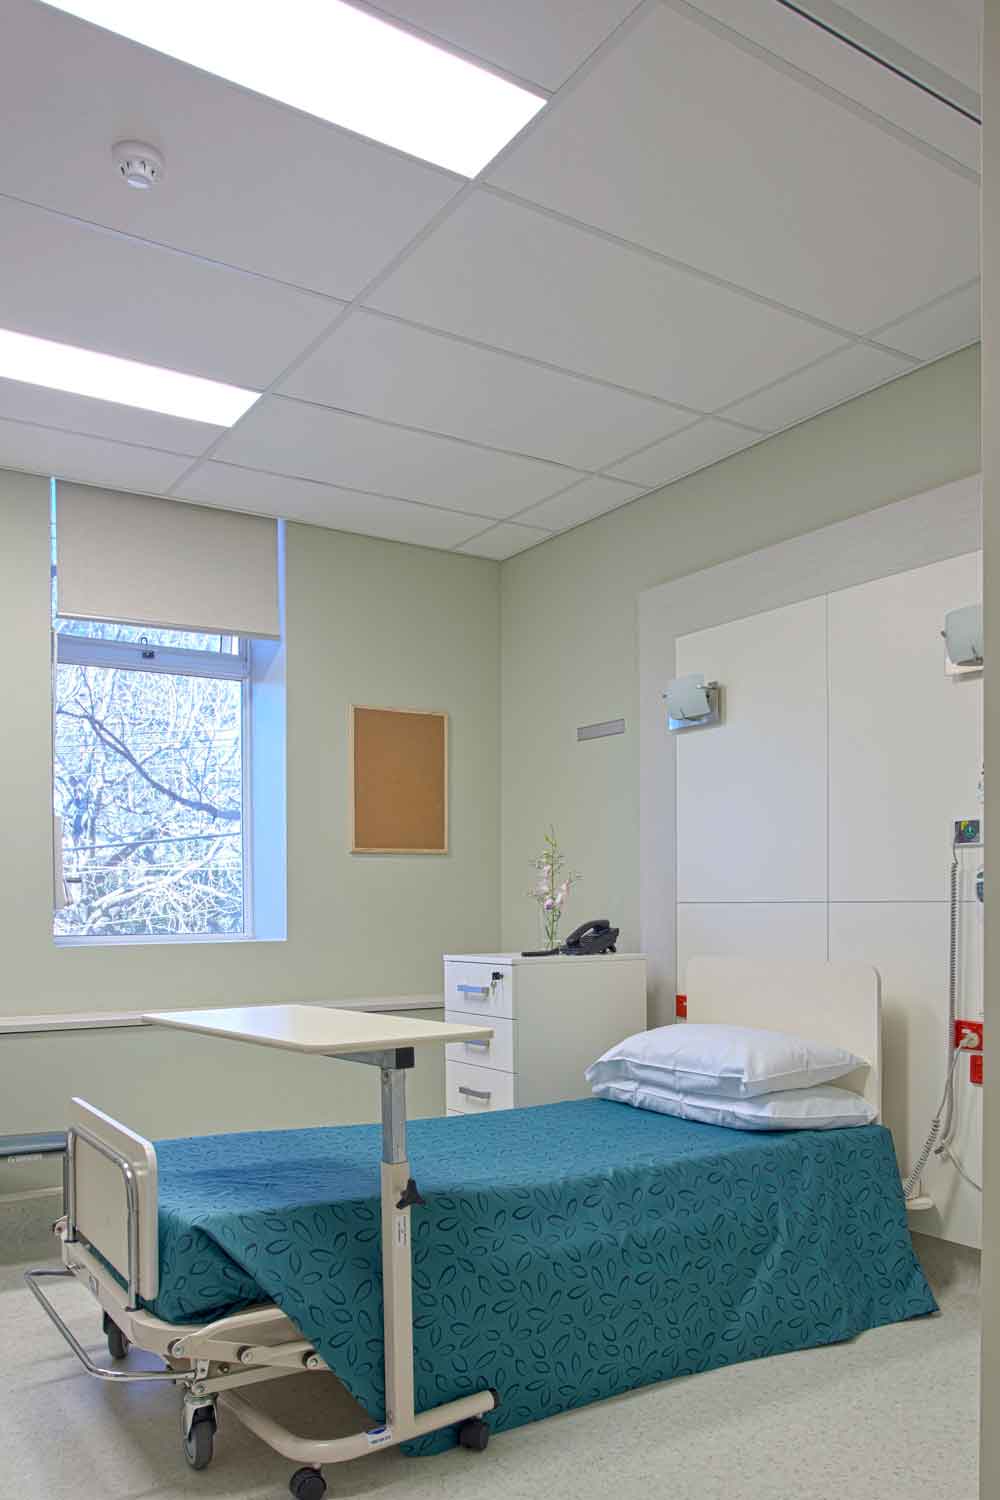 Neringah Hospital – Wahroonga